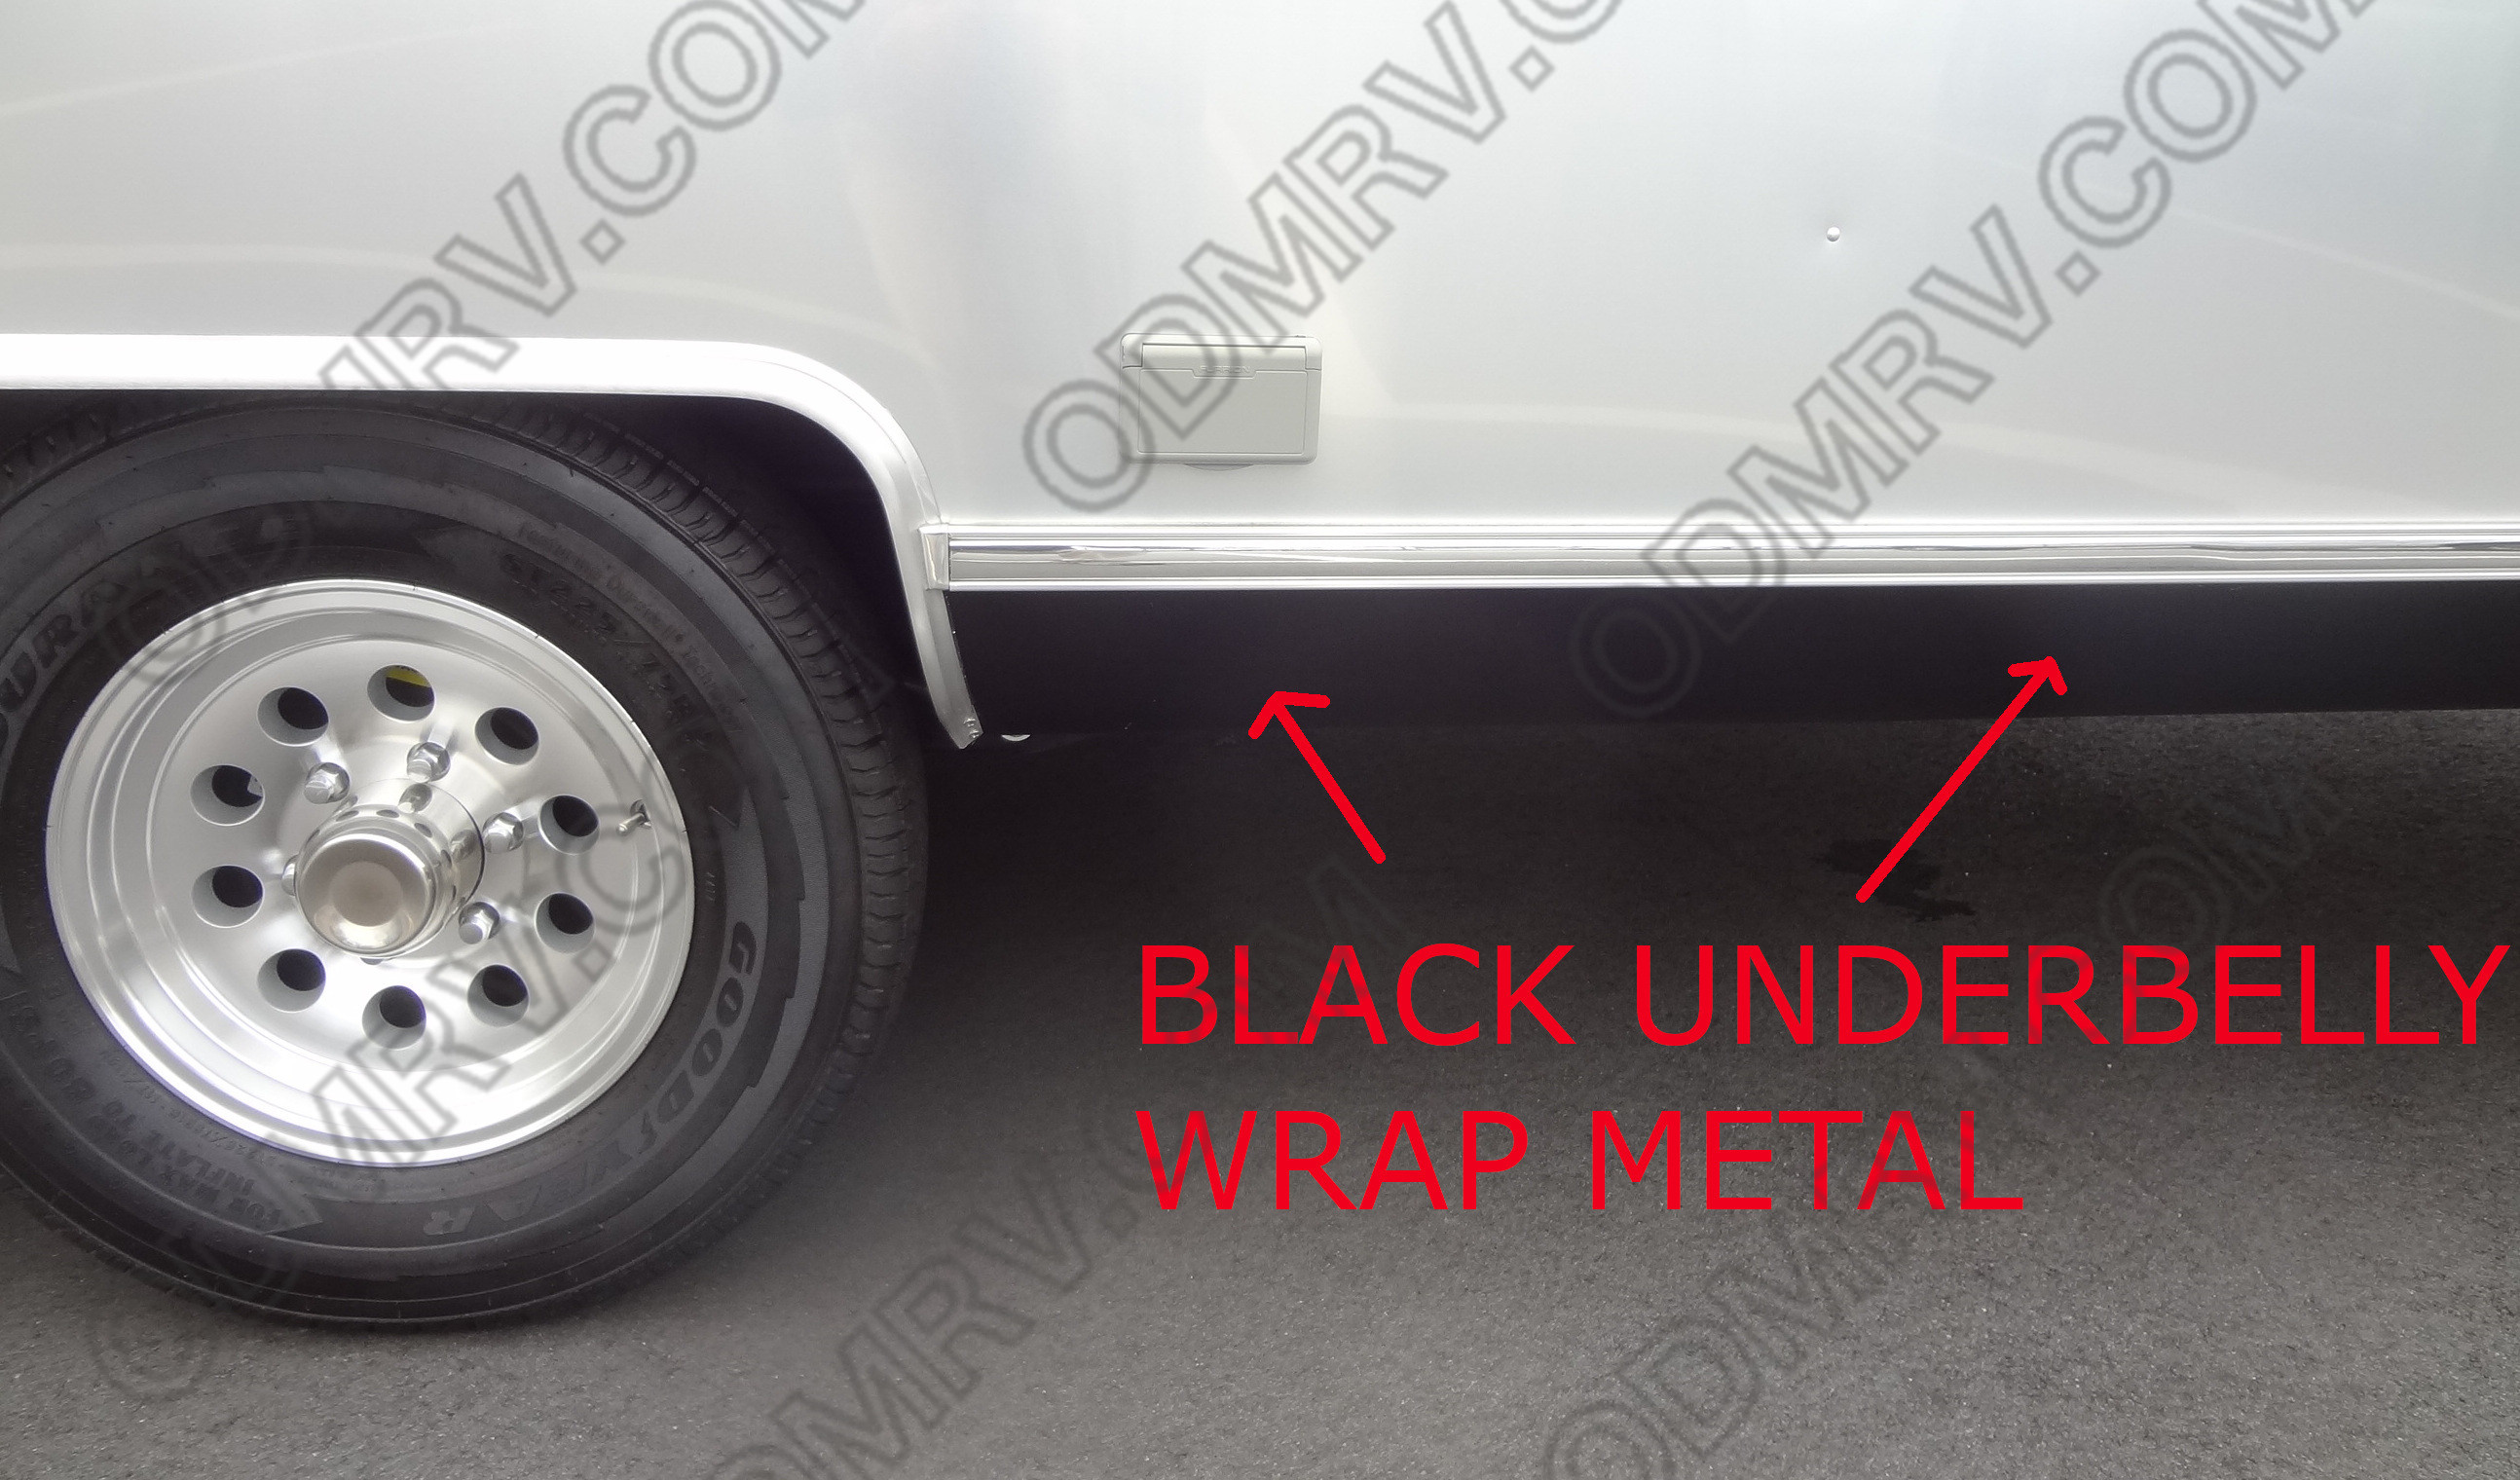 Airstream Black Underbelly Wrap Metal 116167-02